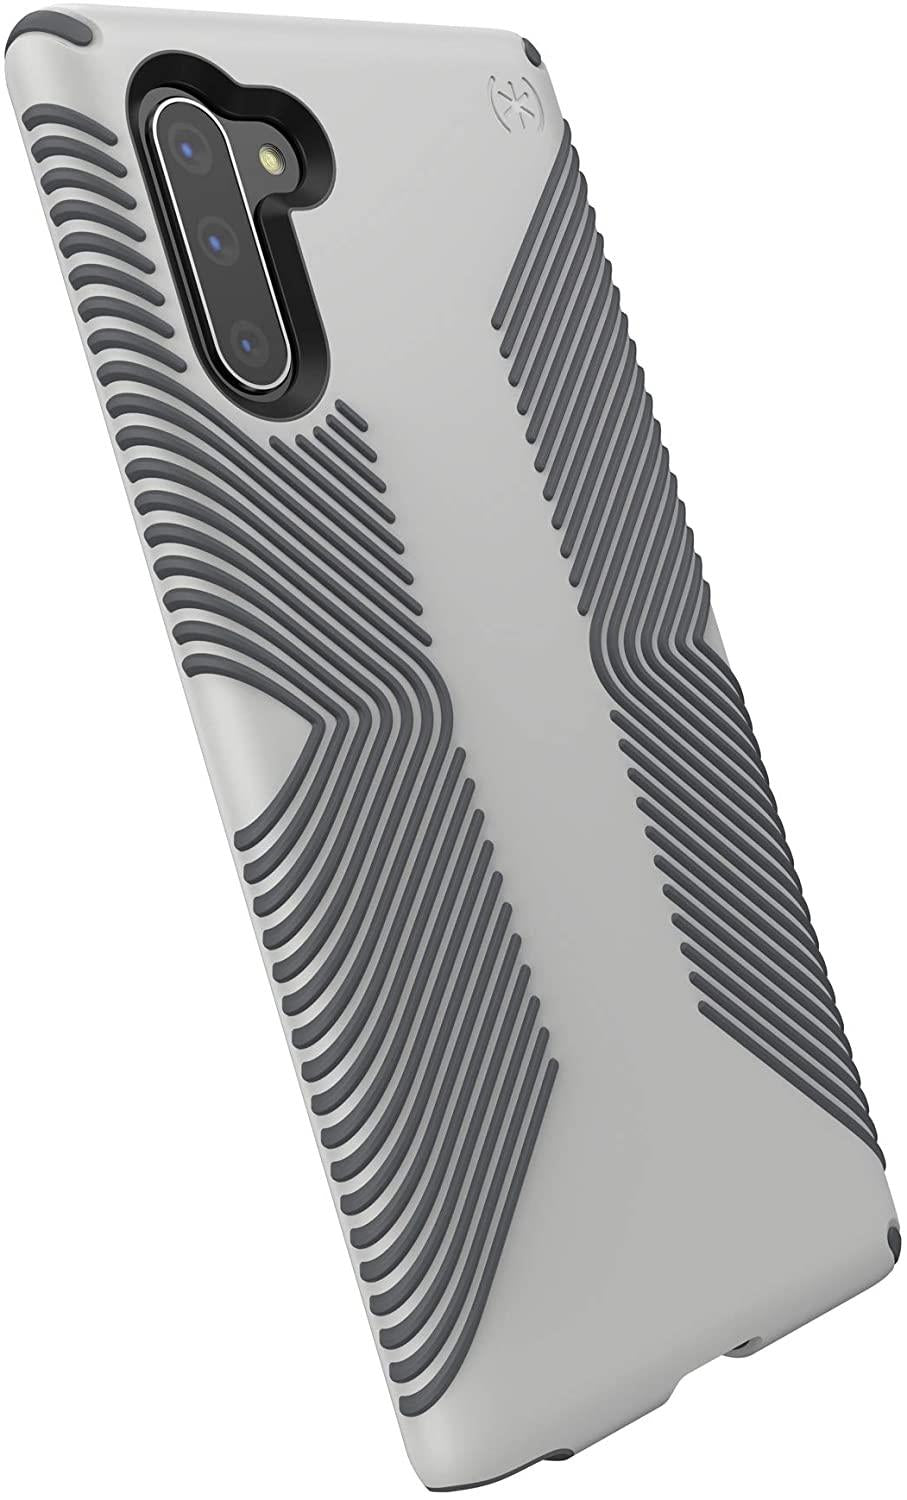 Speck Presidio Grip Samsung Galaxy Note 10 Case, Marble Grey/Anthracite Grey